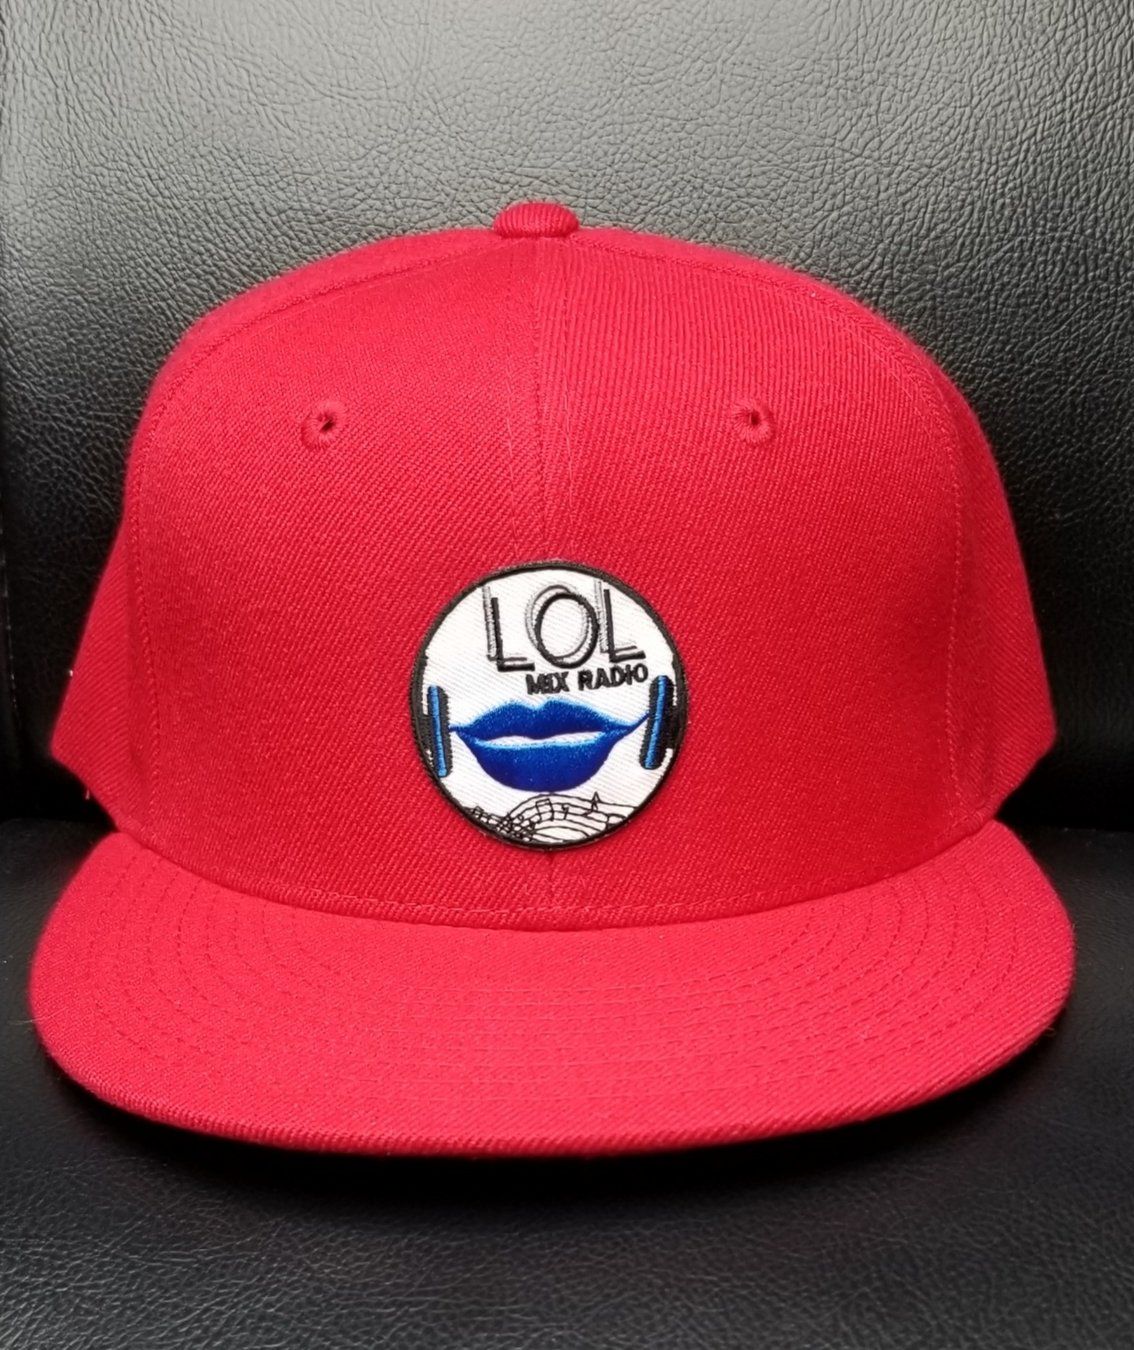 Lolmixradio hats